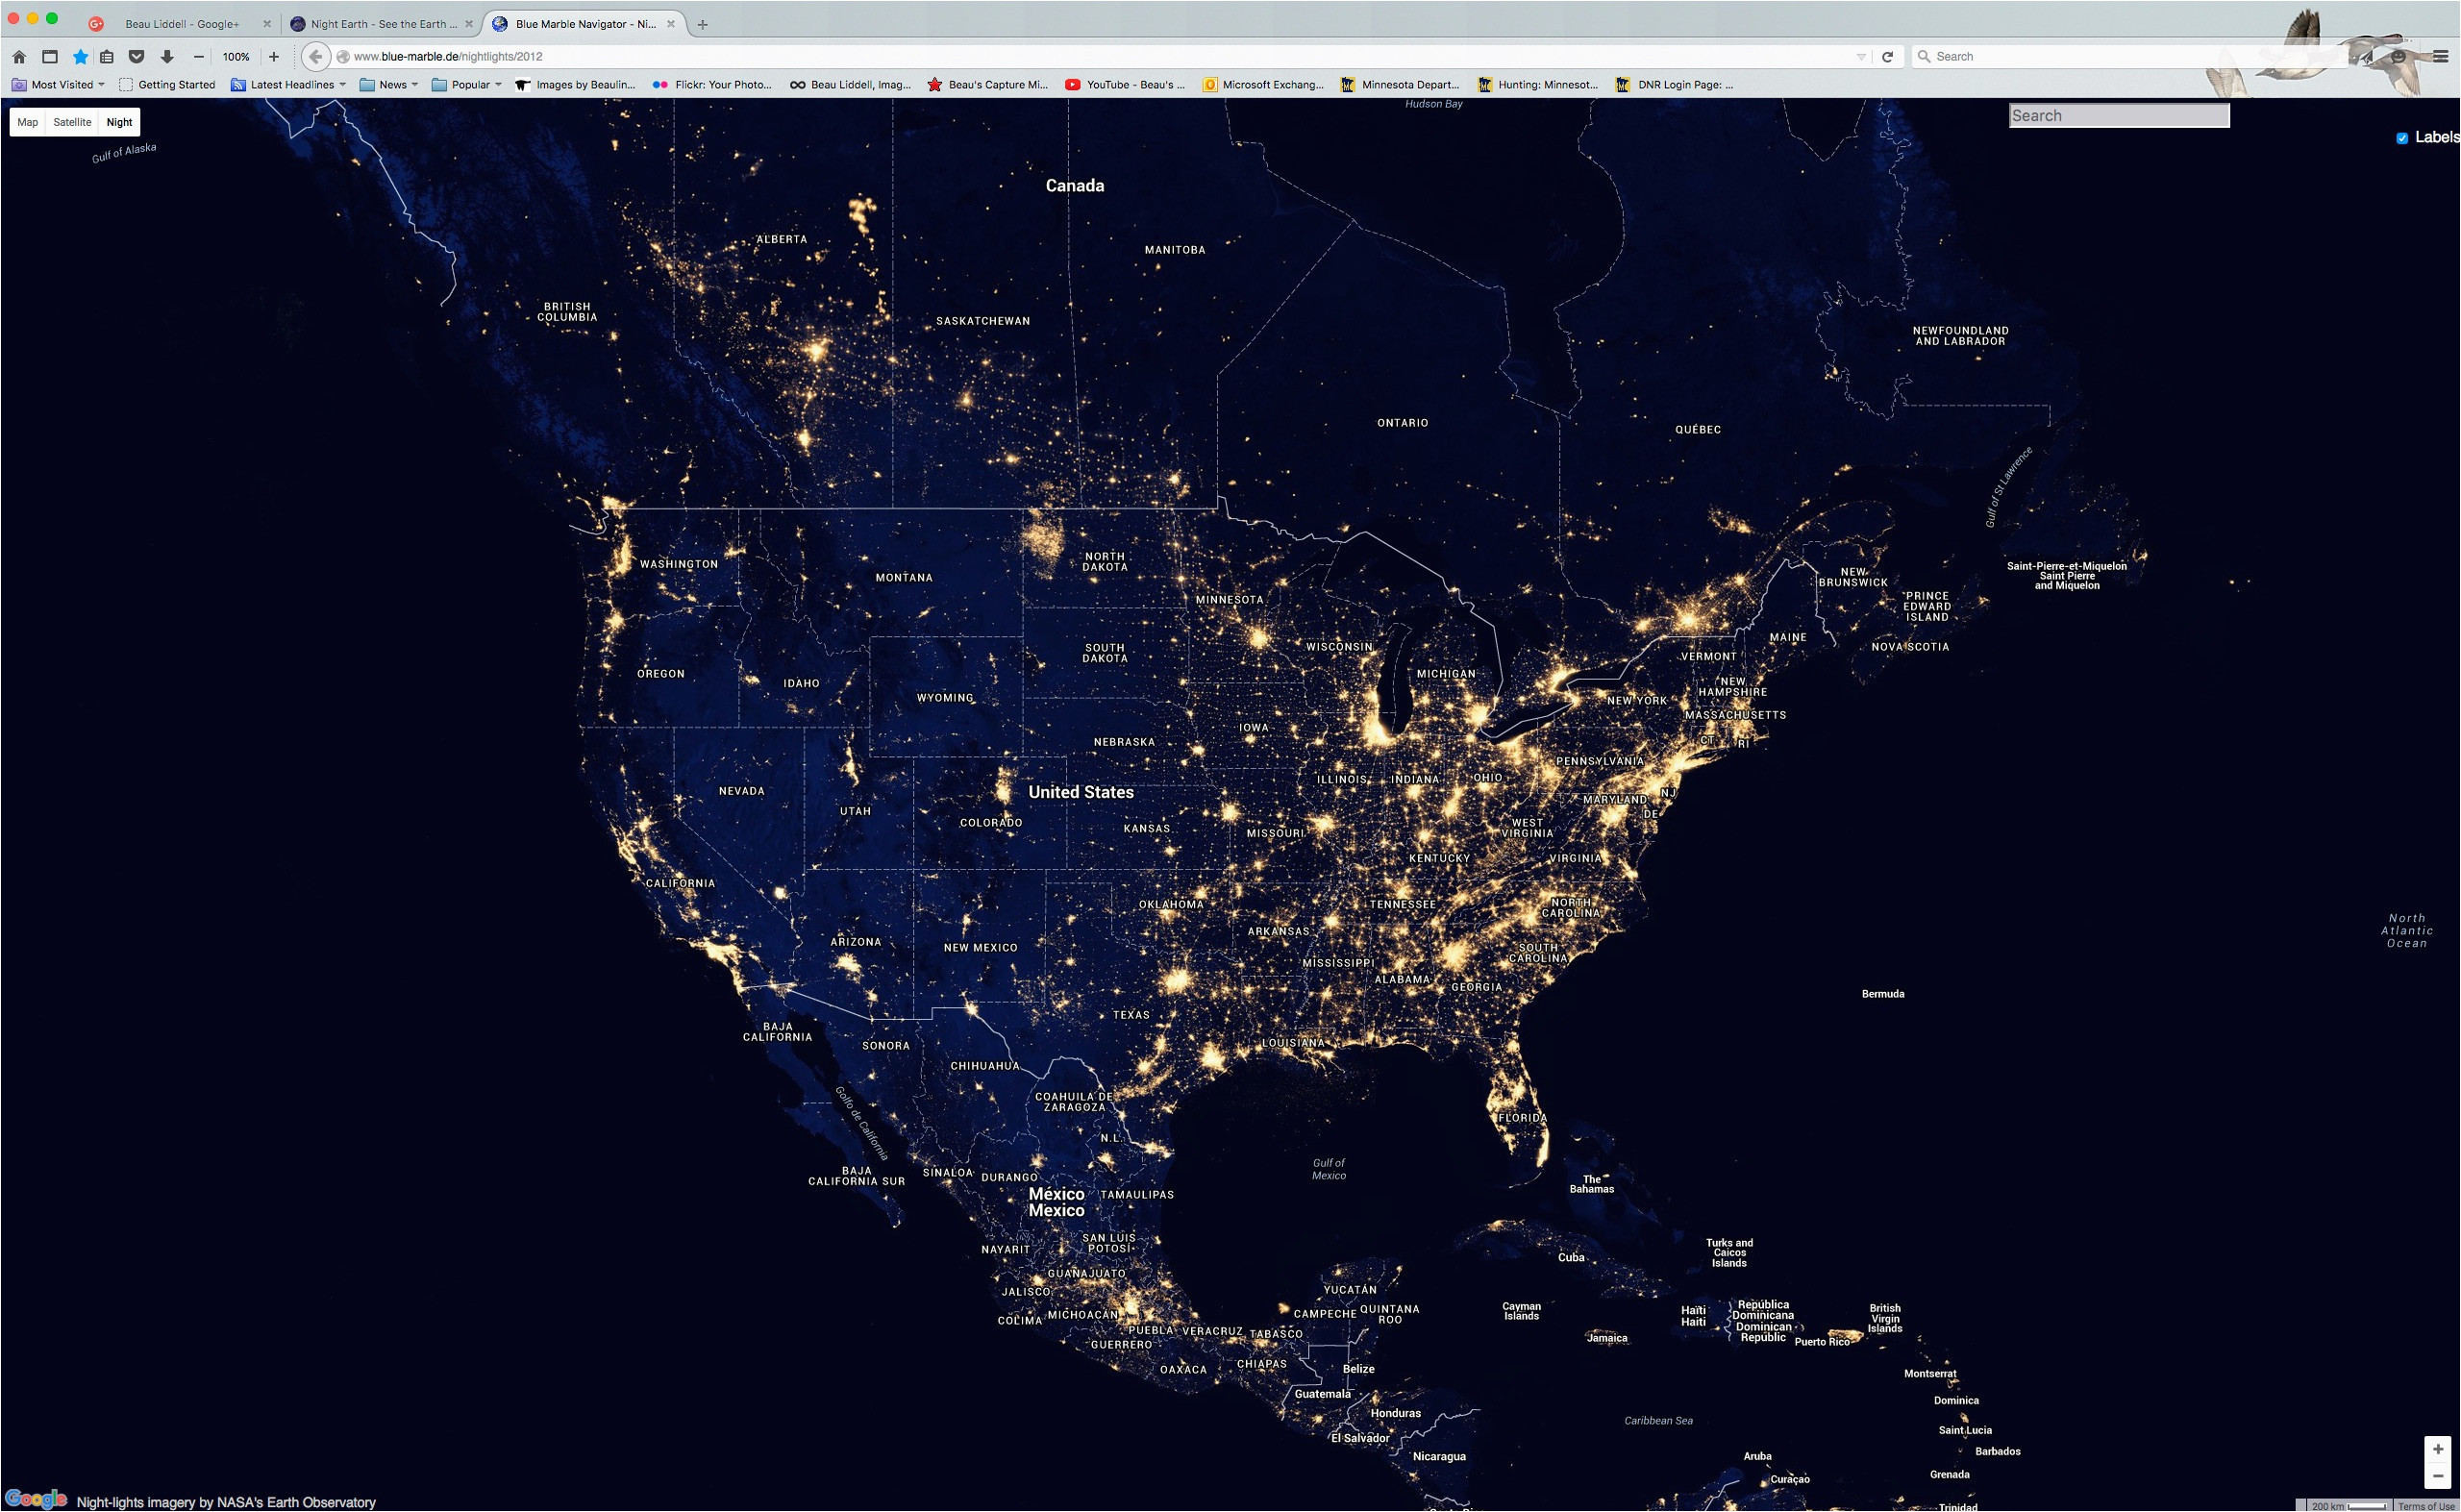 light pollution map california massivegroove com